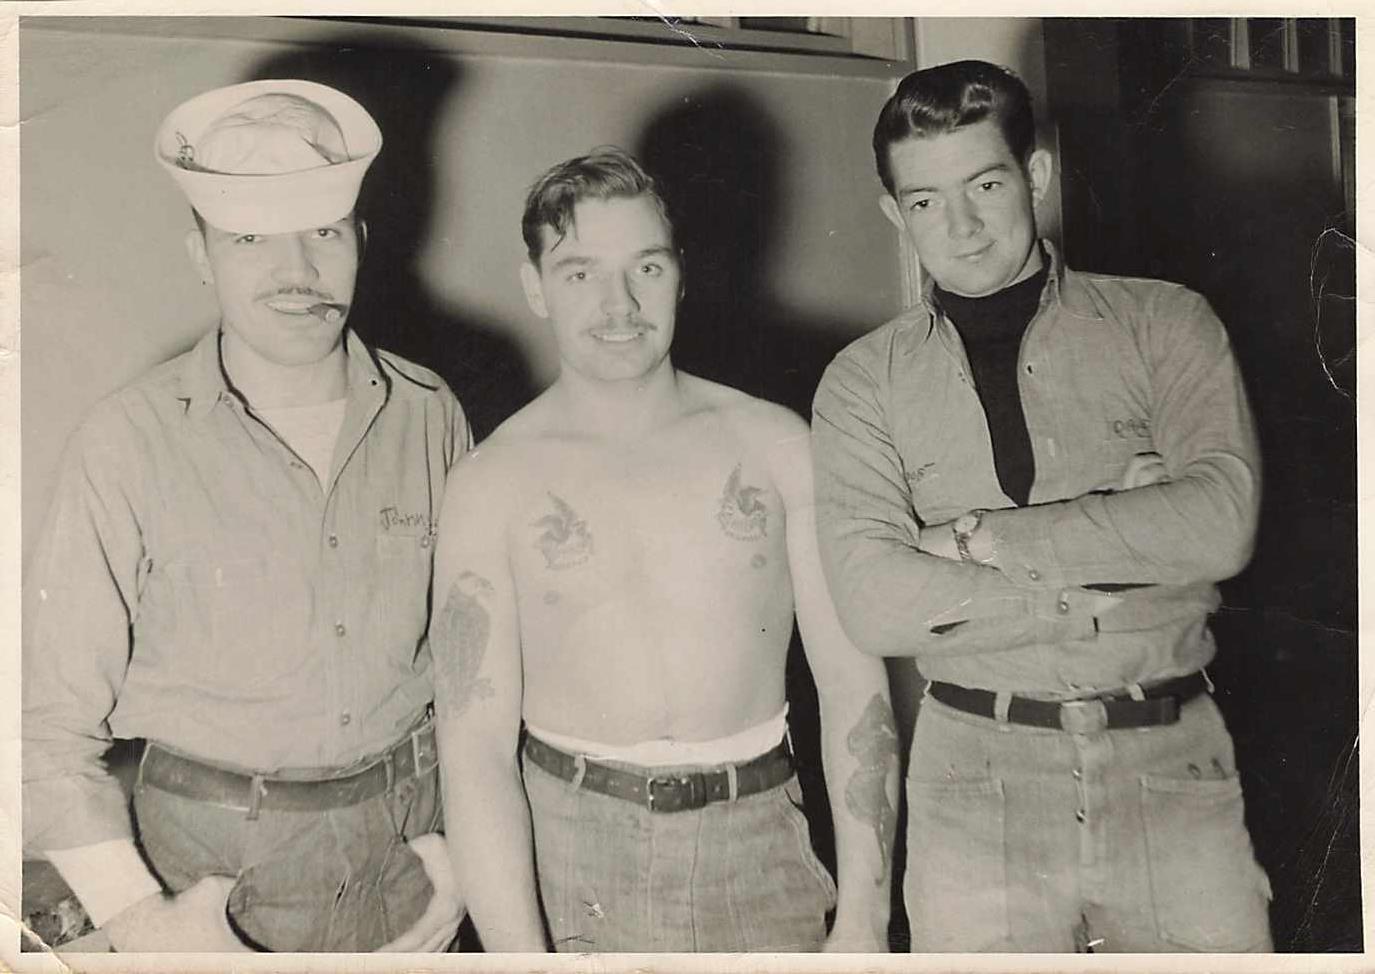 Vintage Photo 3 Navy Men Shirtless Tattoos Gay Int Club? 1940s - 50s RARE Cigar